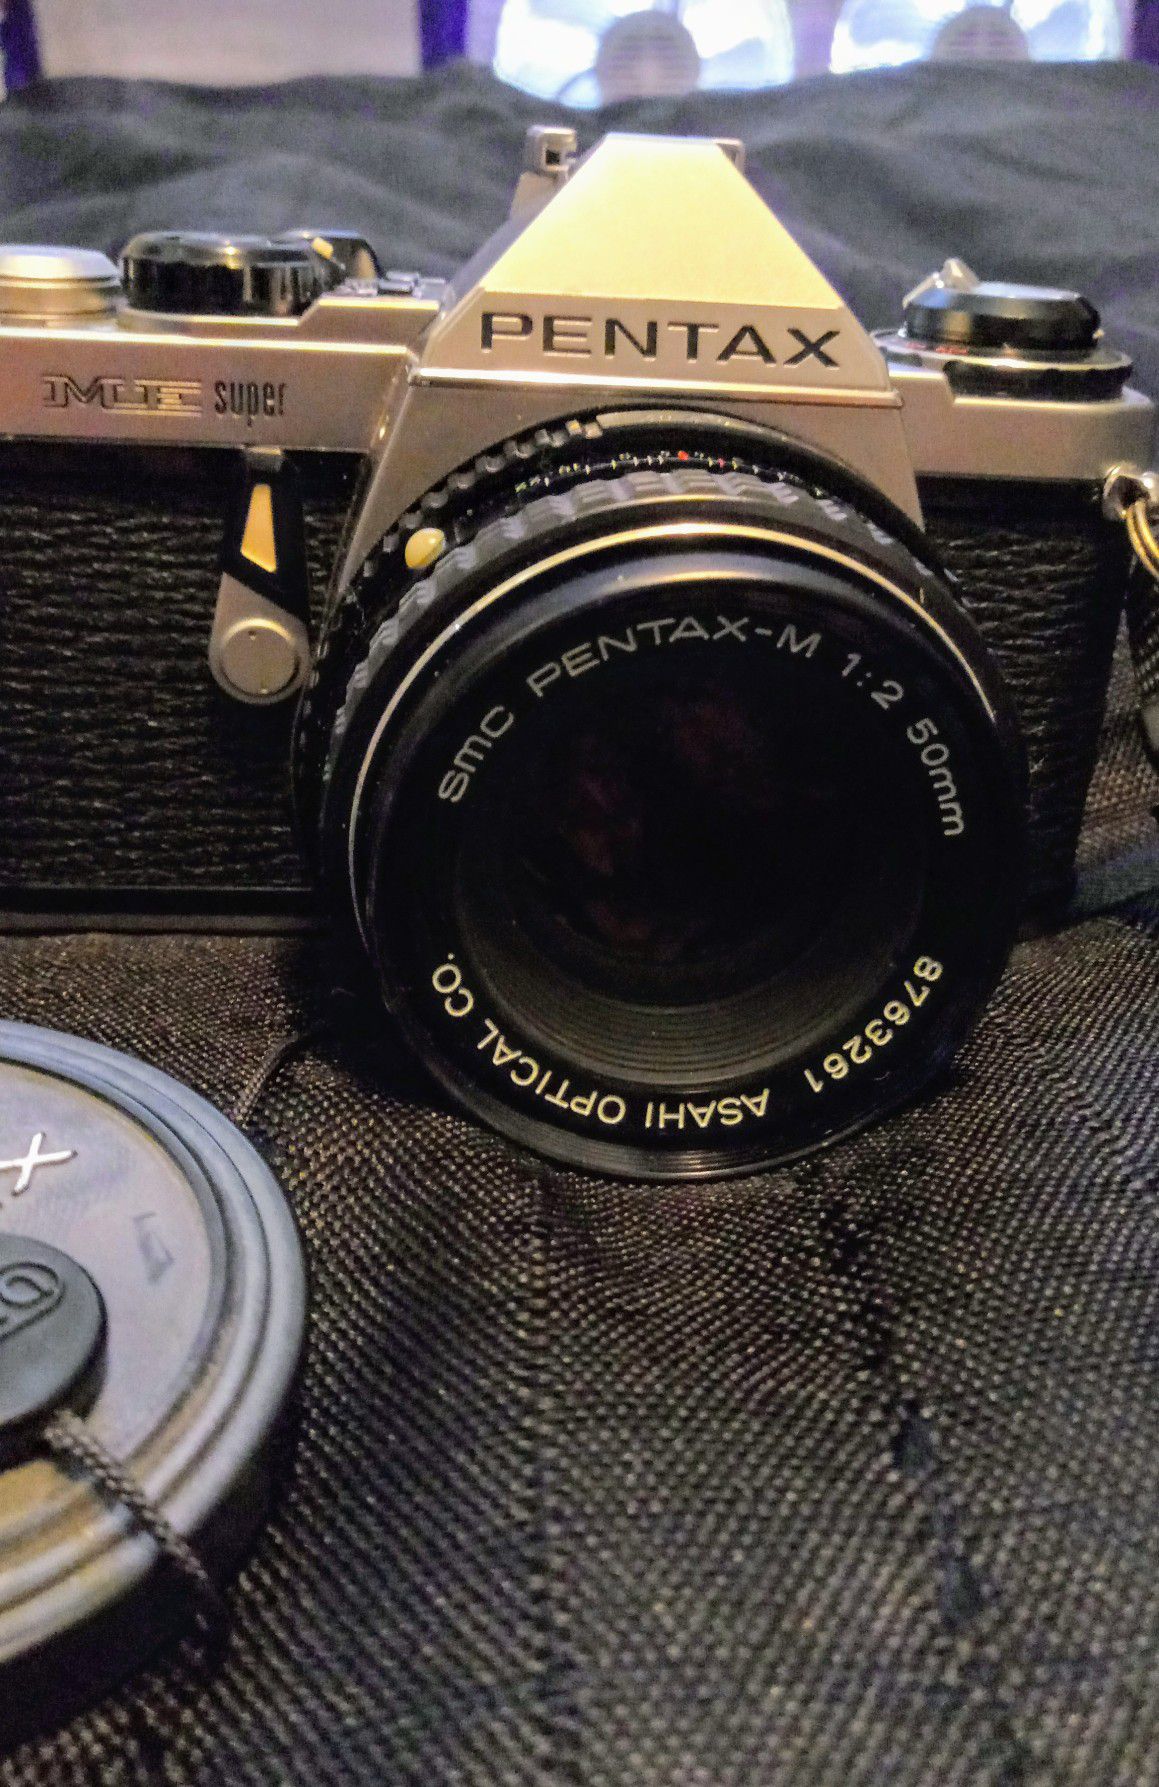 Pentax ME Super with asahi 1:2 5mm lens